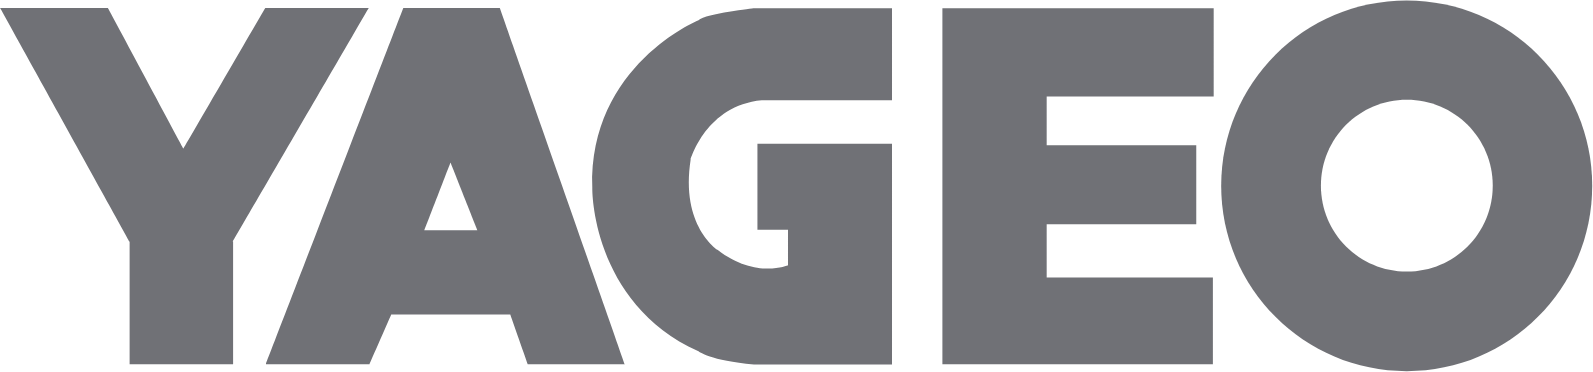 Yageo logo large (transparent PNG)